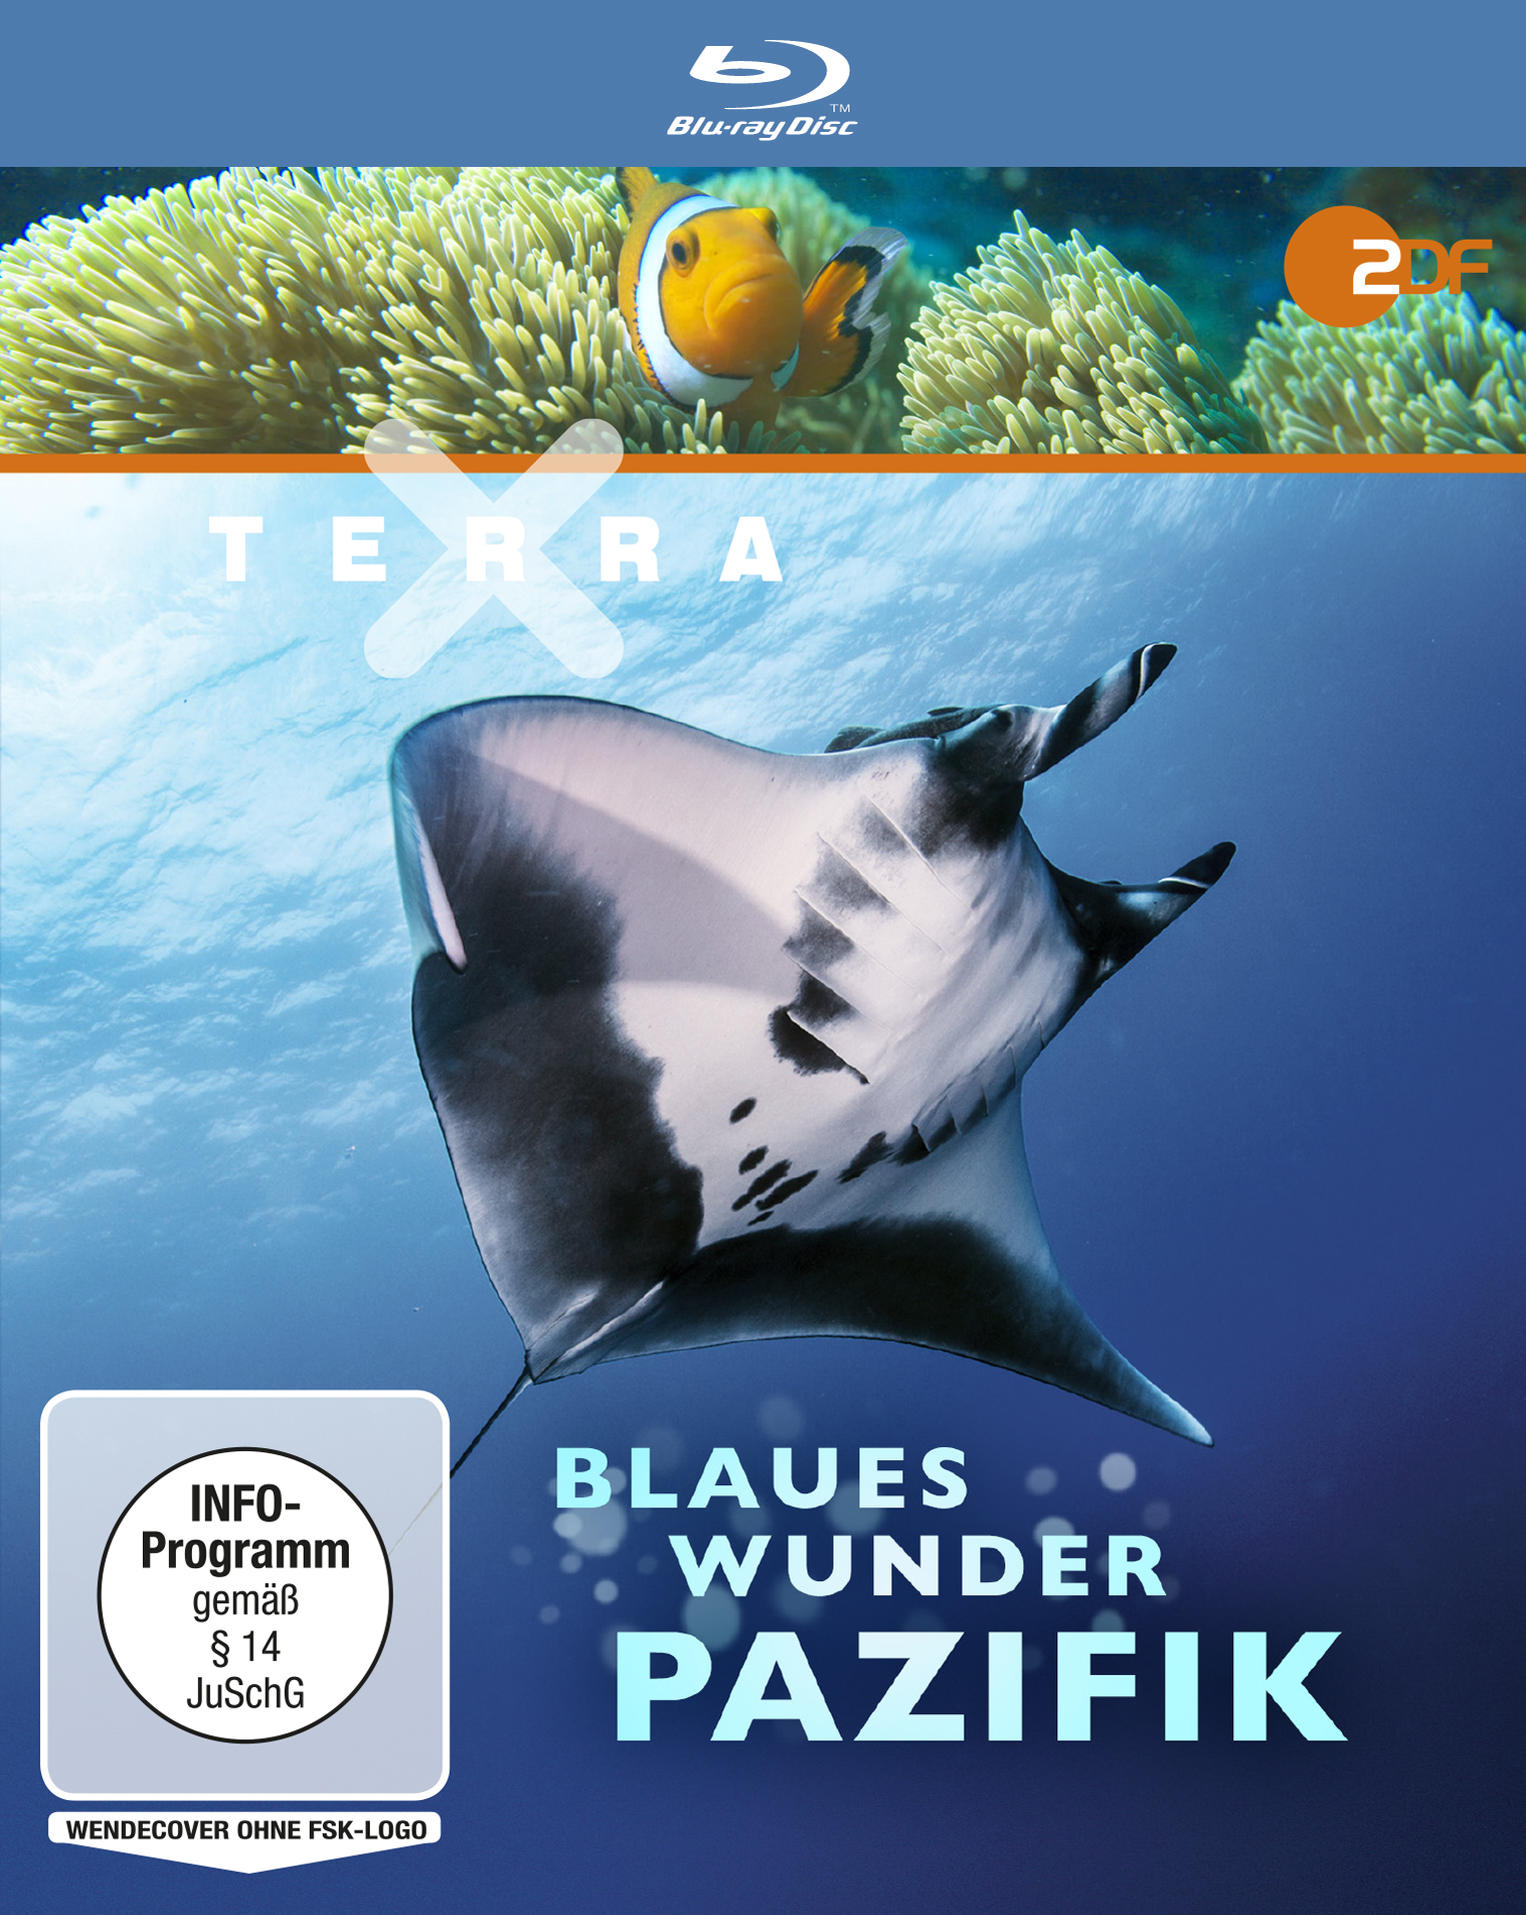 Terra X: Blaues Wunder Blu-ray Pazifik